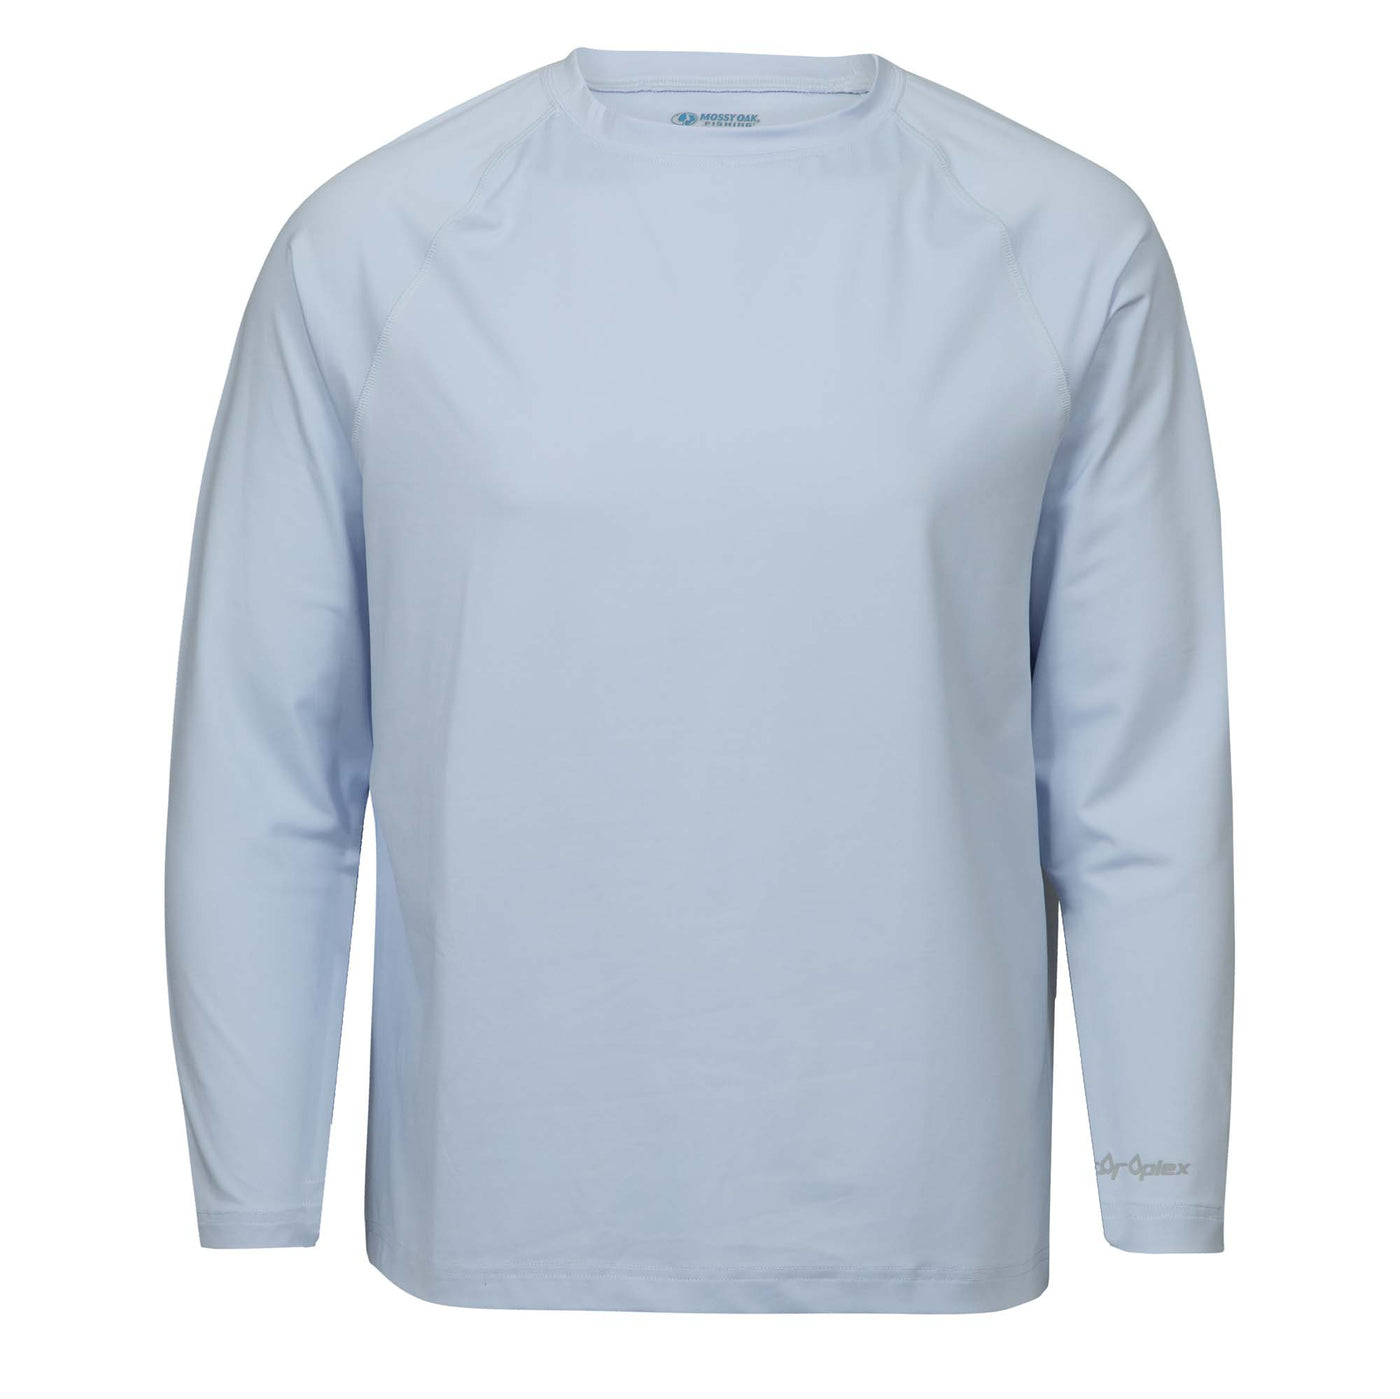 Mossy Oak Shield Long Sleeve Tech Shirt